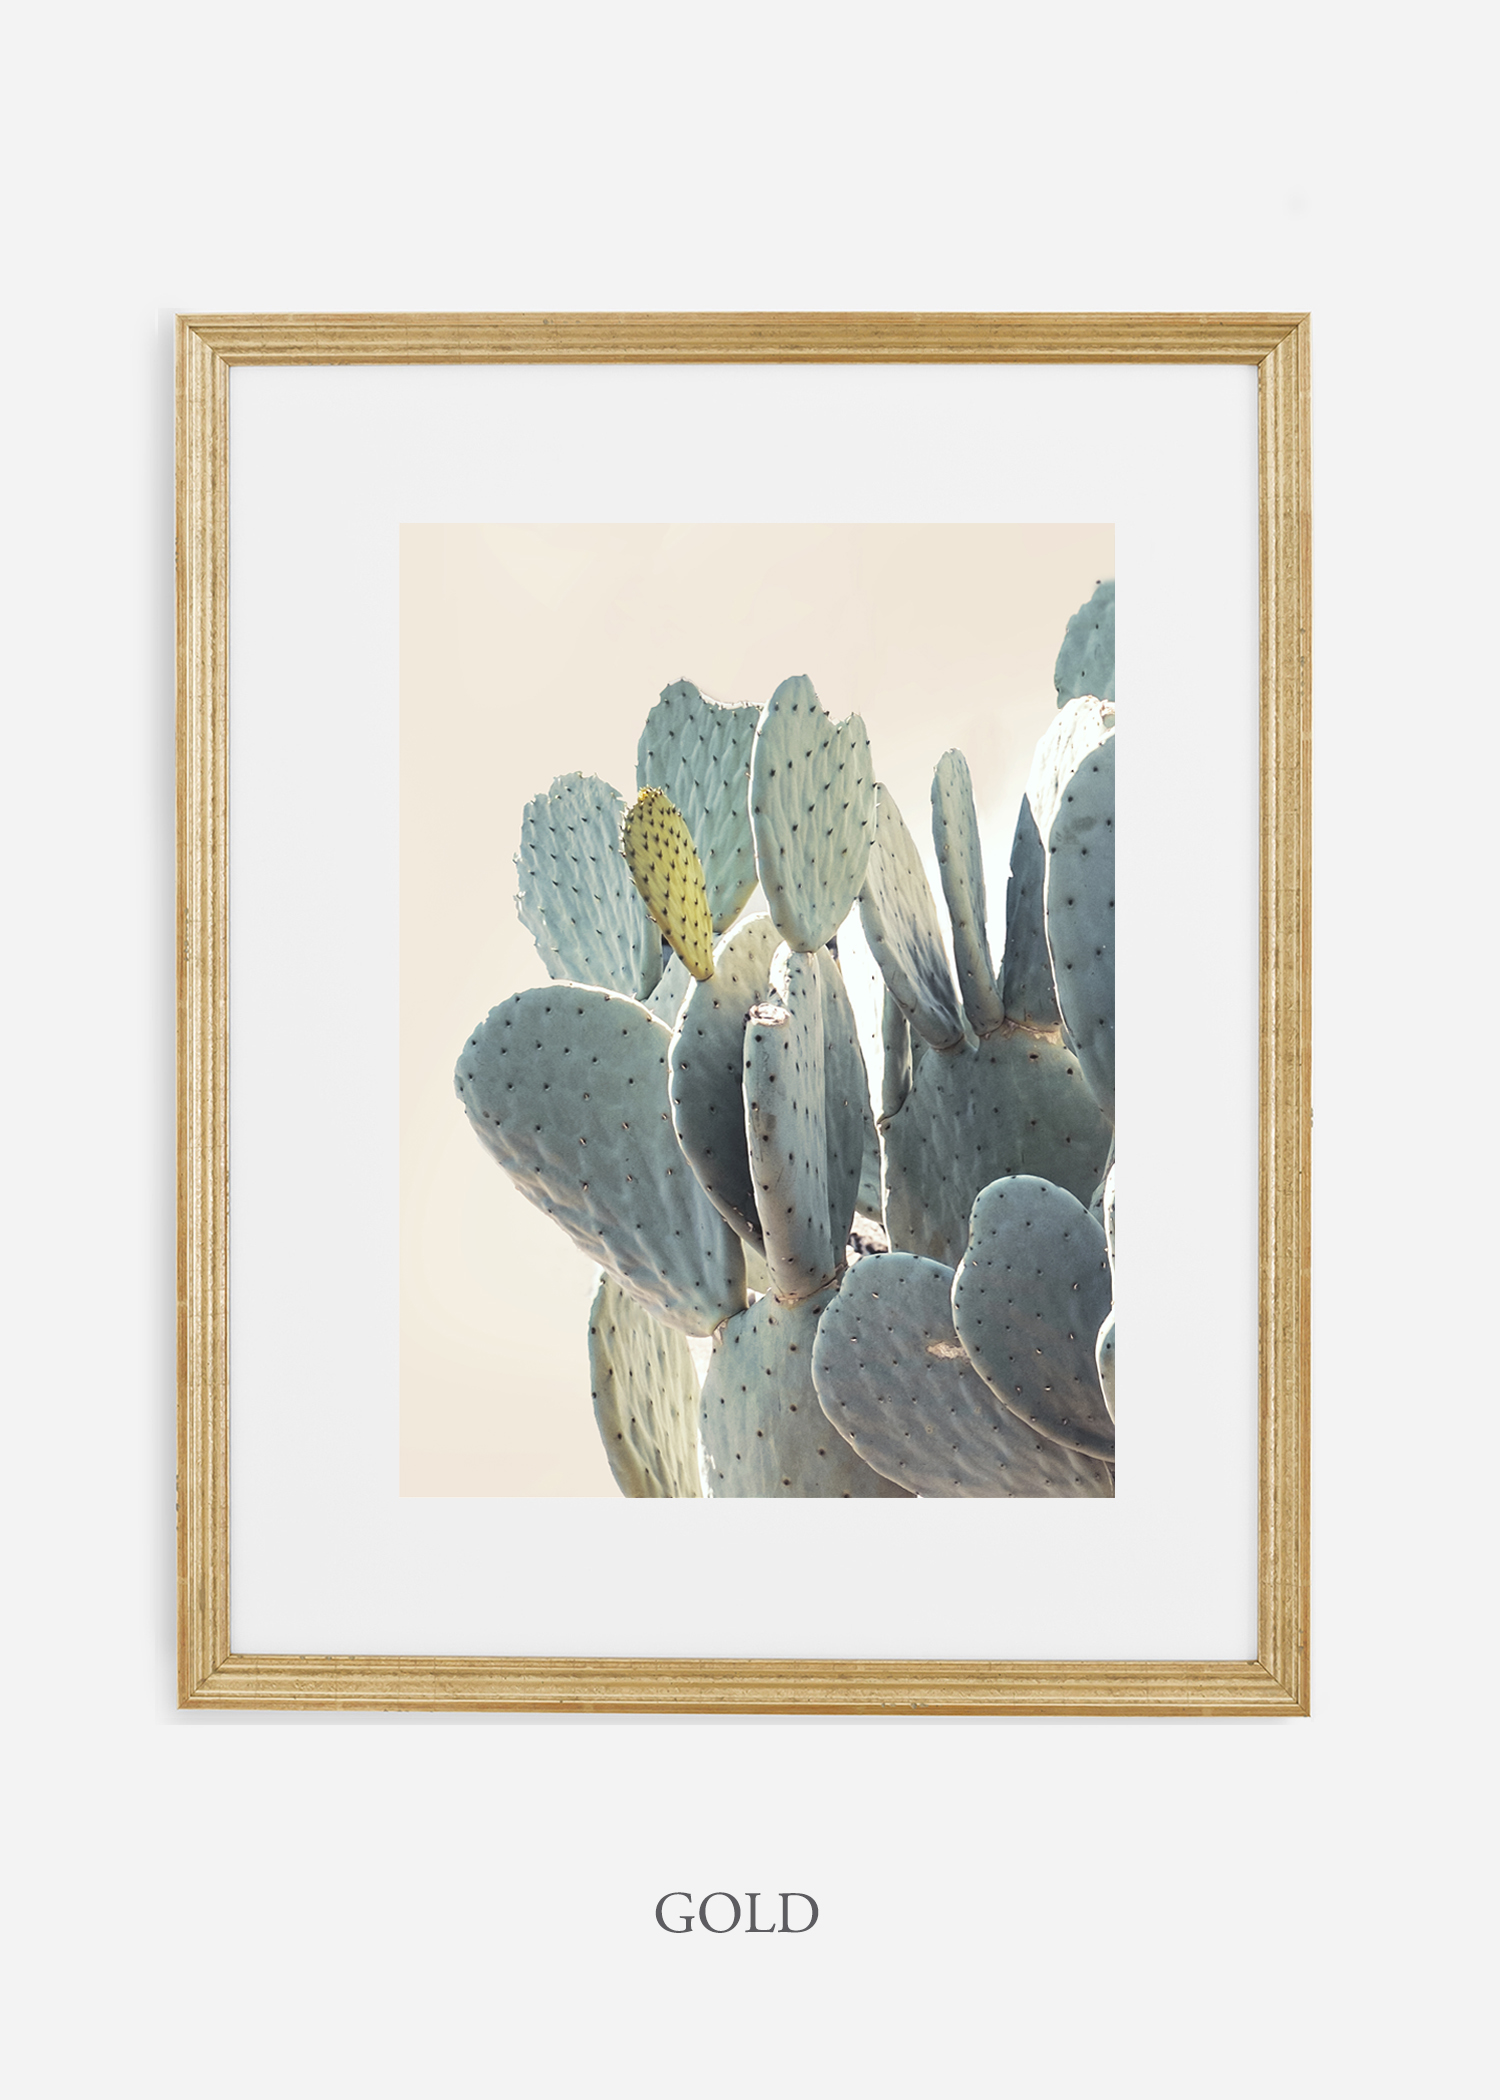 Desert_goldframe_DesertDetails_Cactus__Art_Photography_interiordesign_bohemian_cactusart.jpg